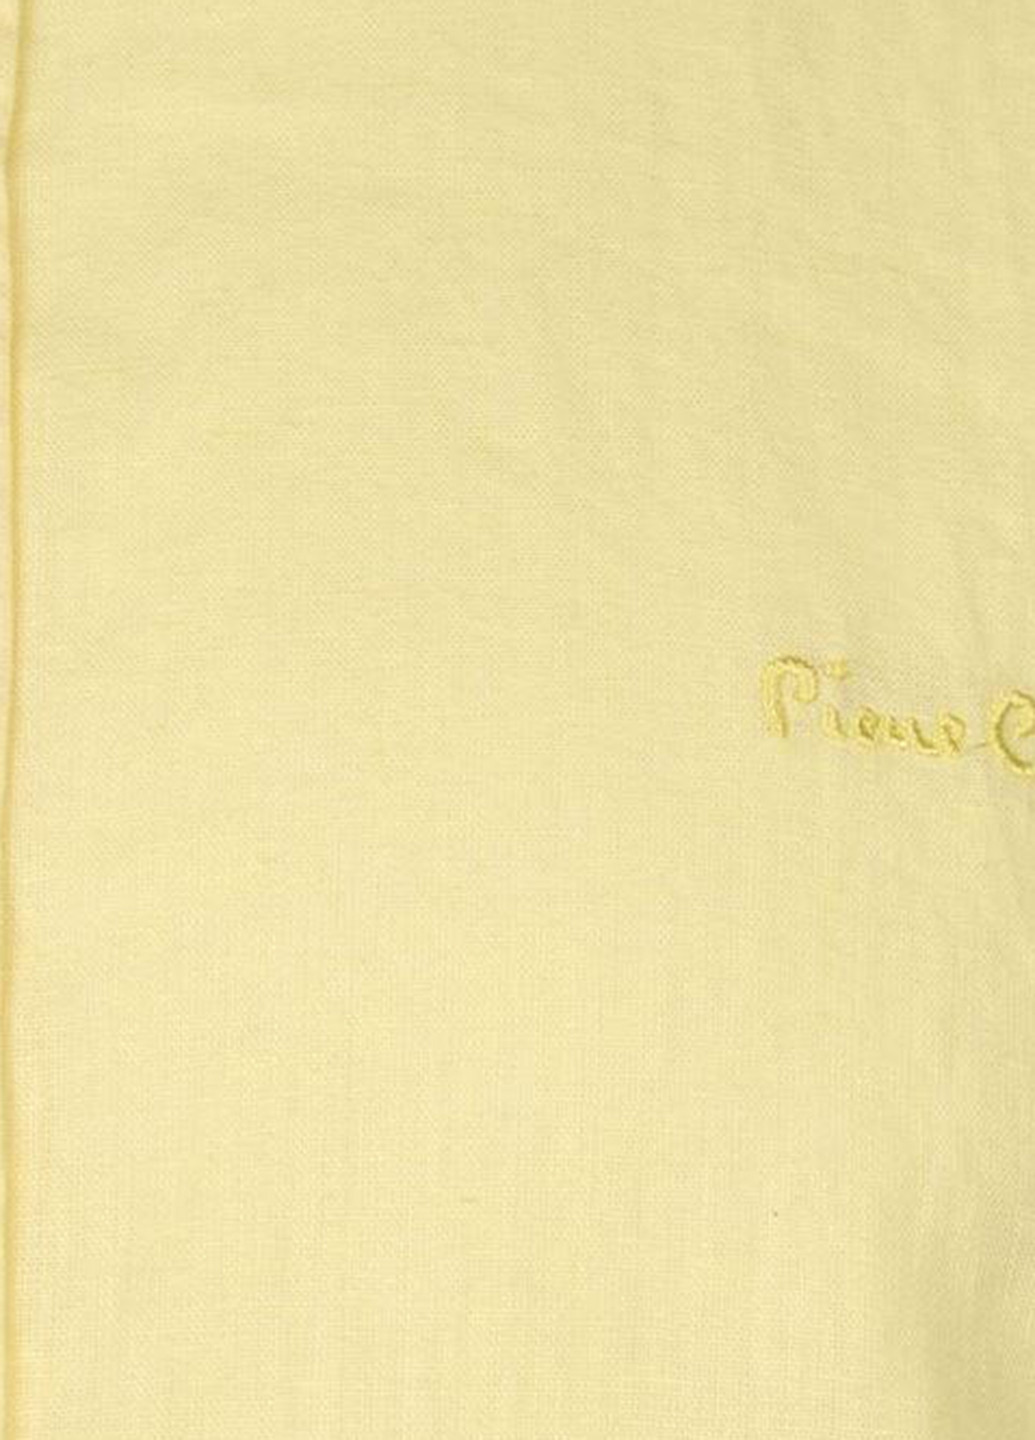 Светло-желтая кэжуал рубашка меланж Pierre Cardin с длинным рукавом